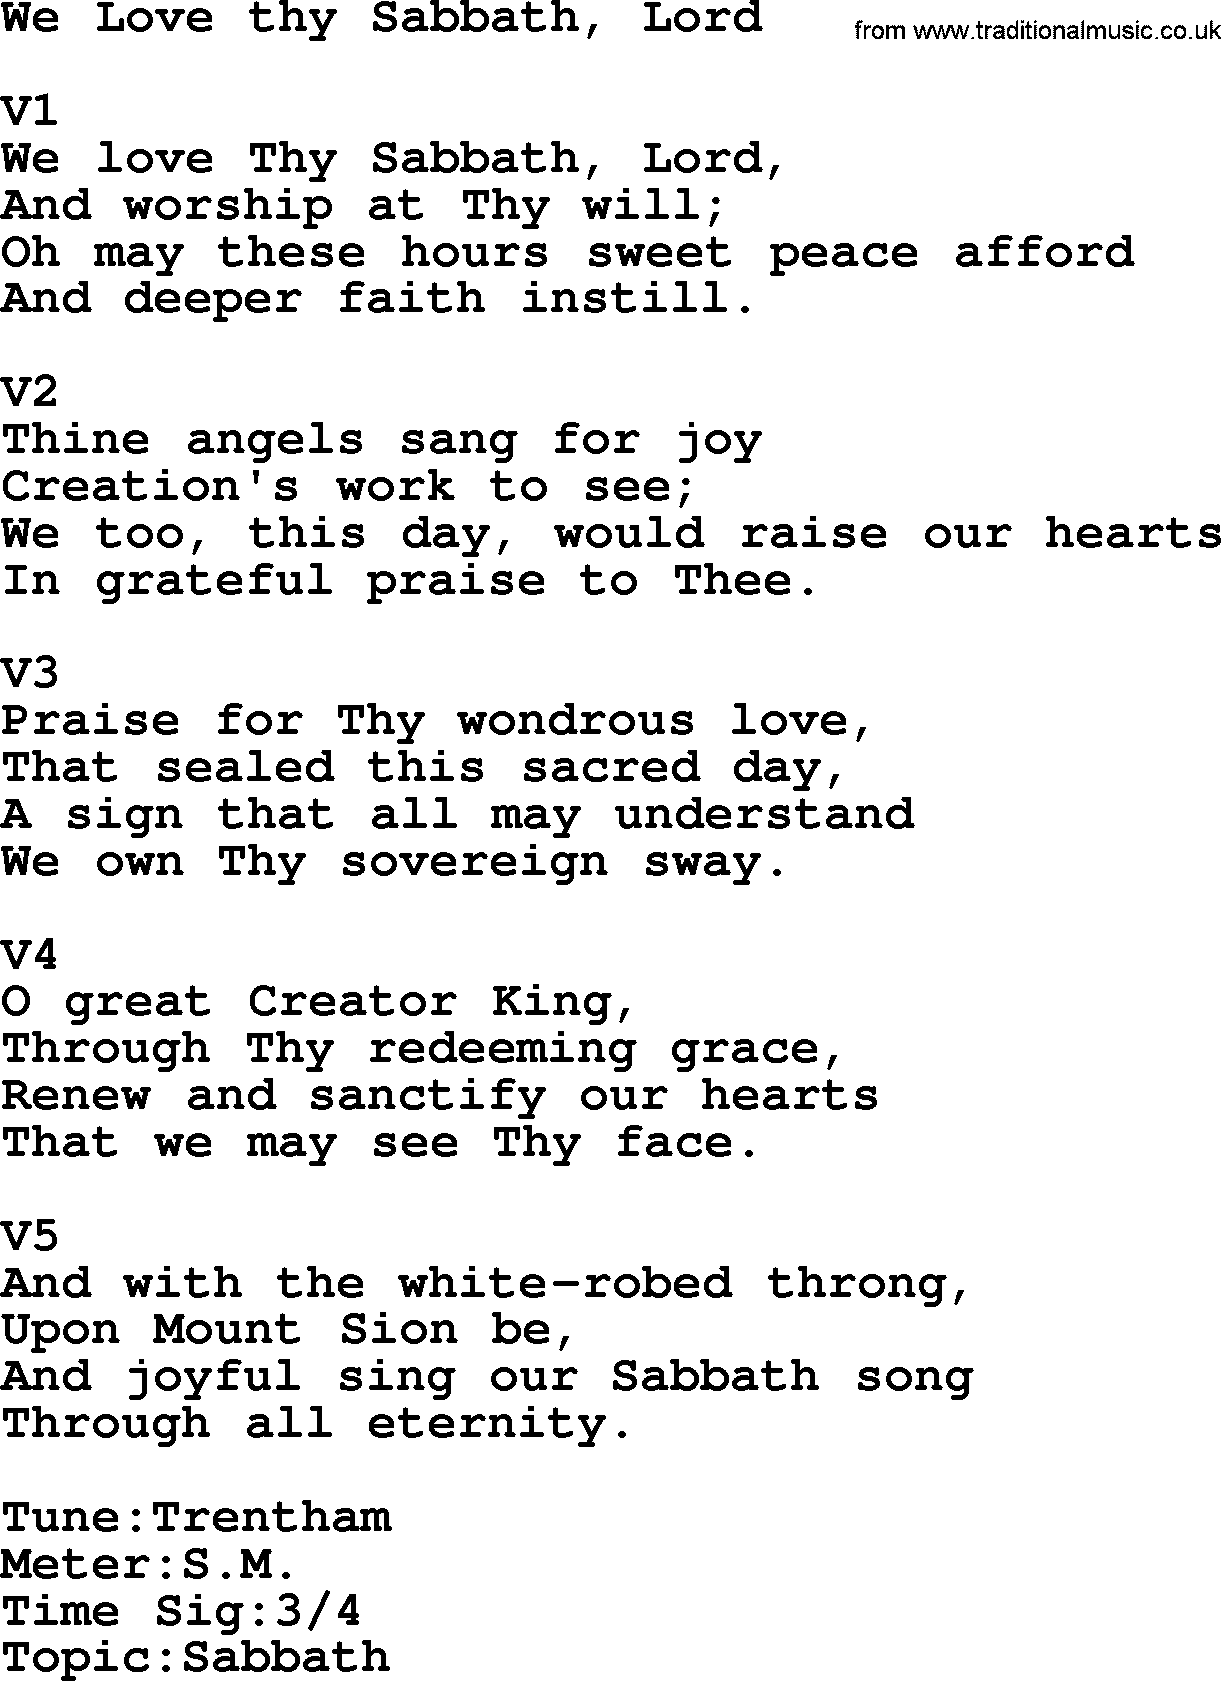 Adventist Hynms collection, Hymn: We Love Thy Sabbath, Lord, lyrics with PDF